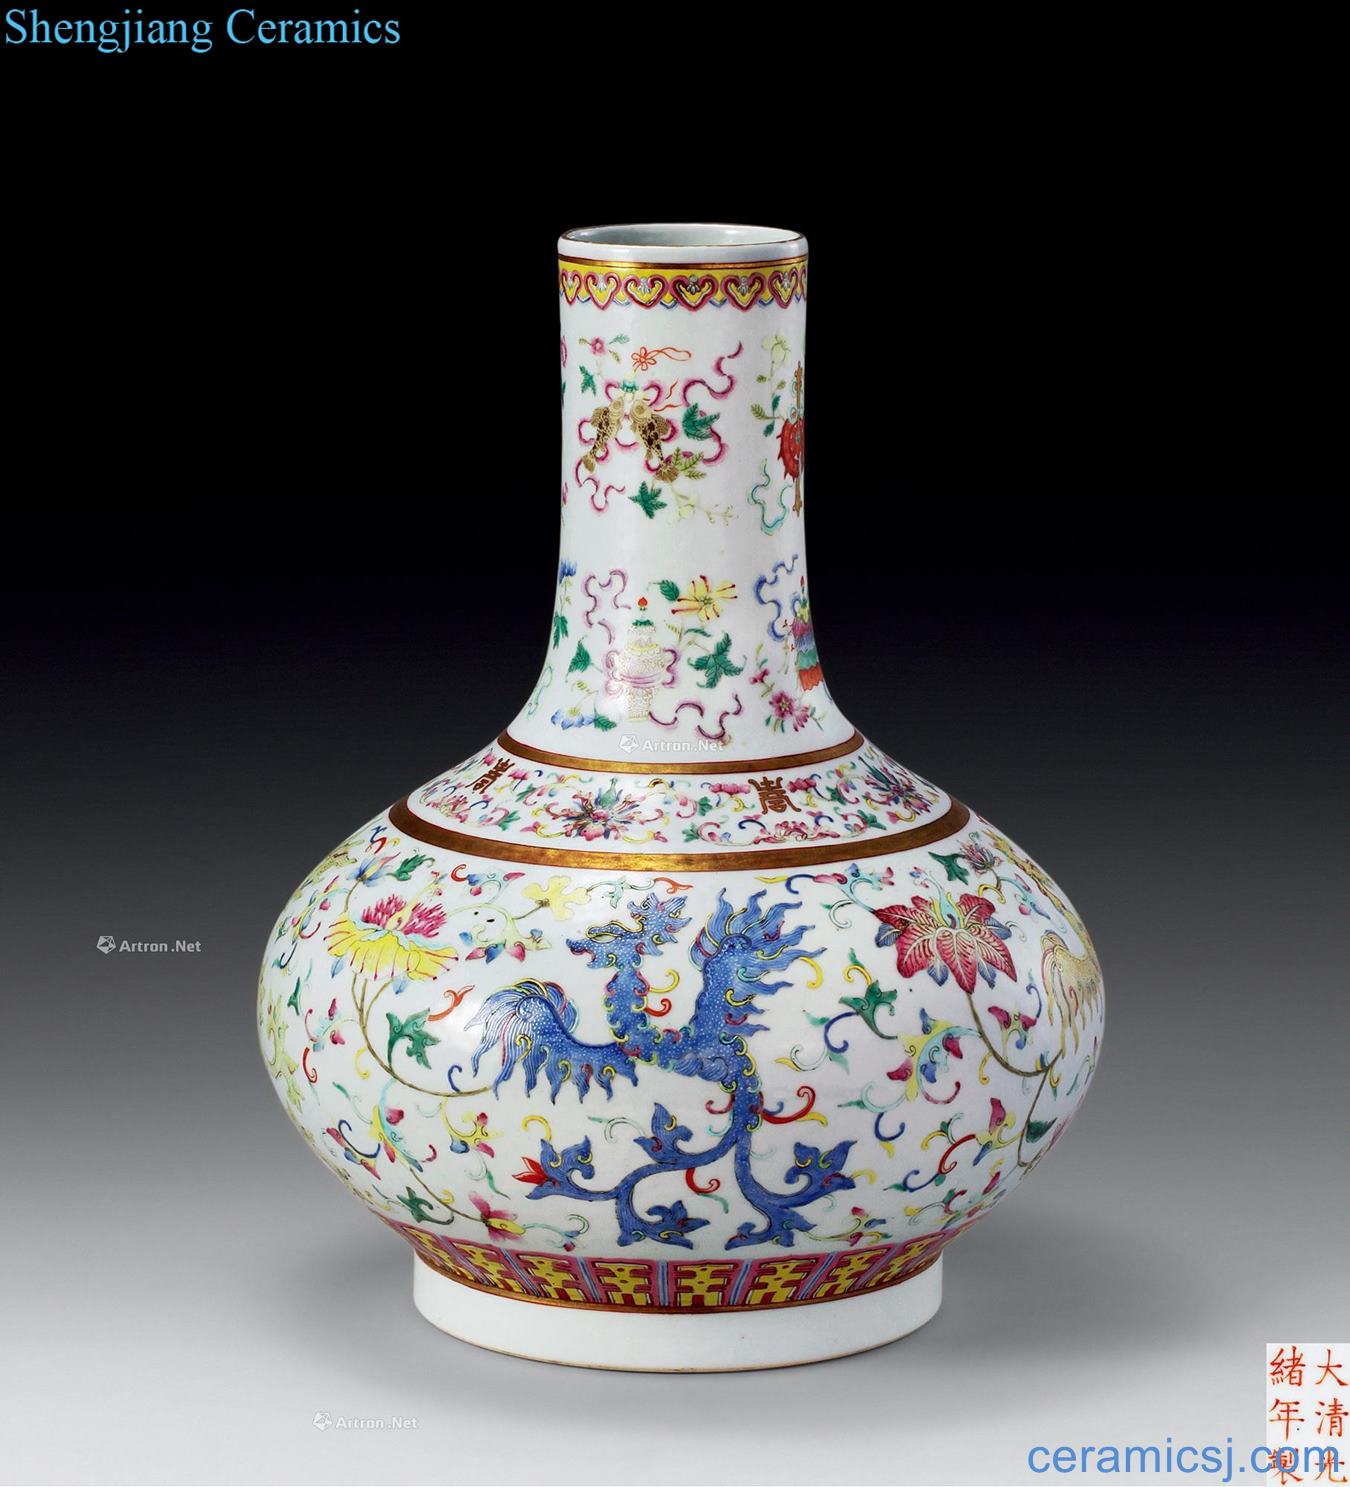 Pastel reign of qing emperor guangxu real talent grain flat bottles